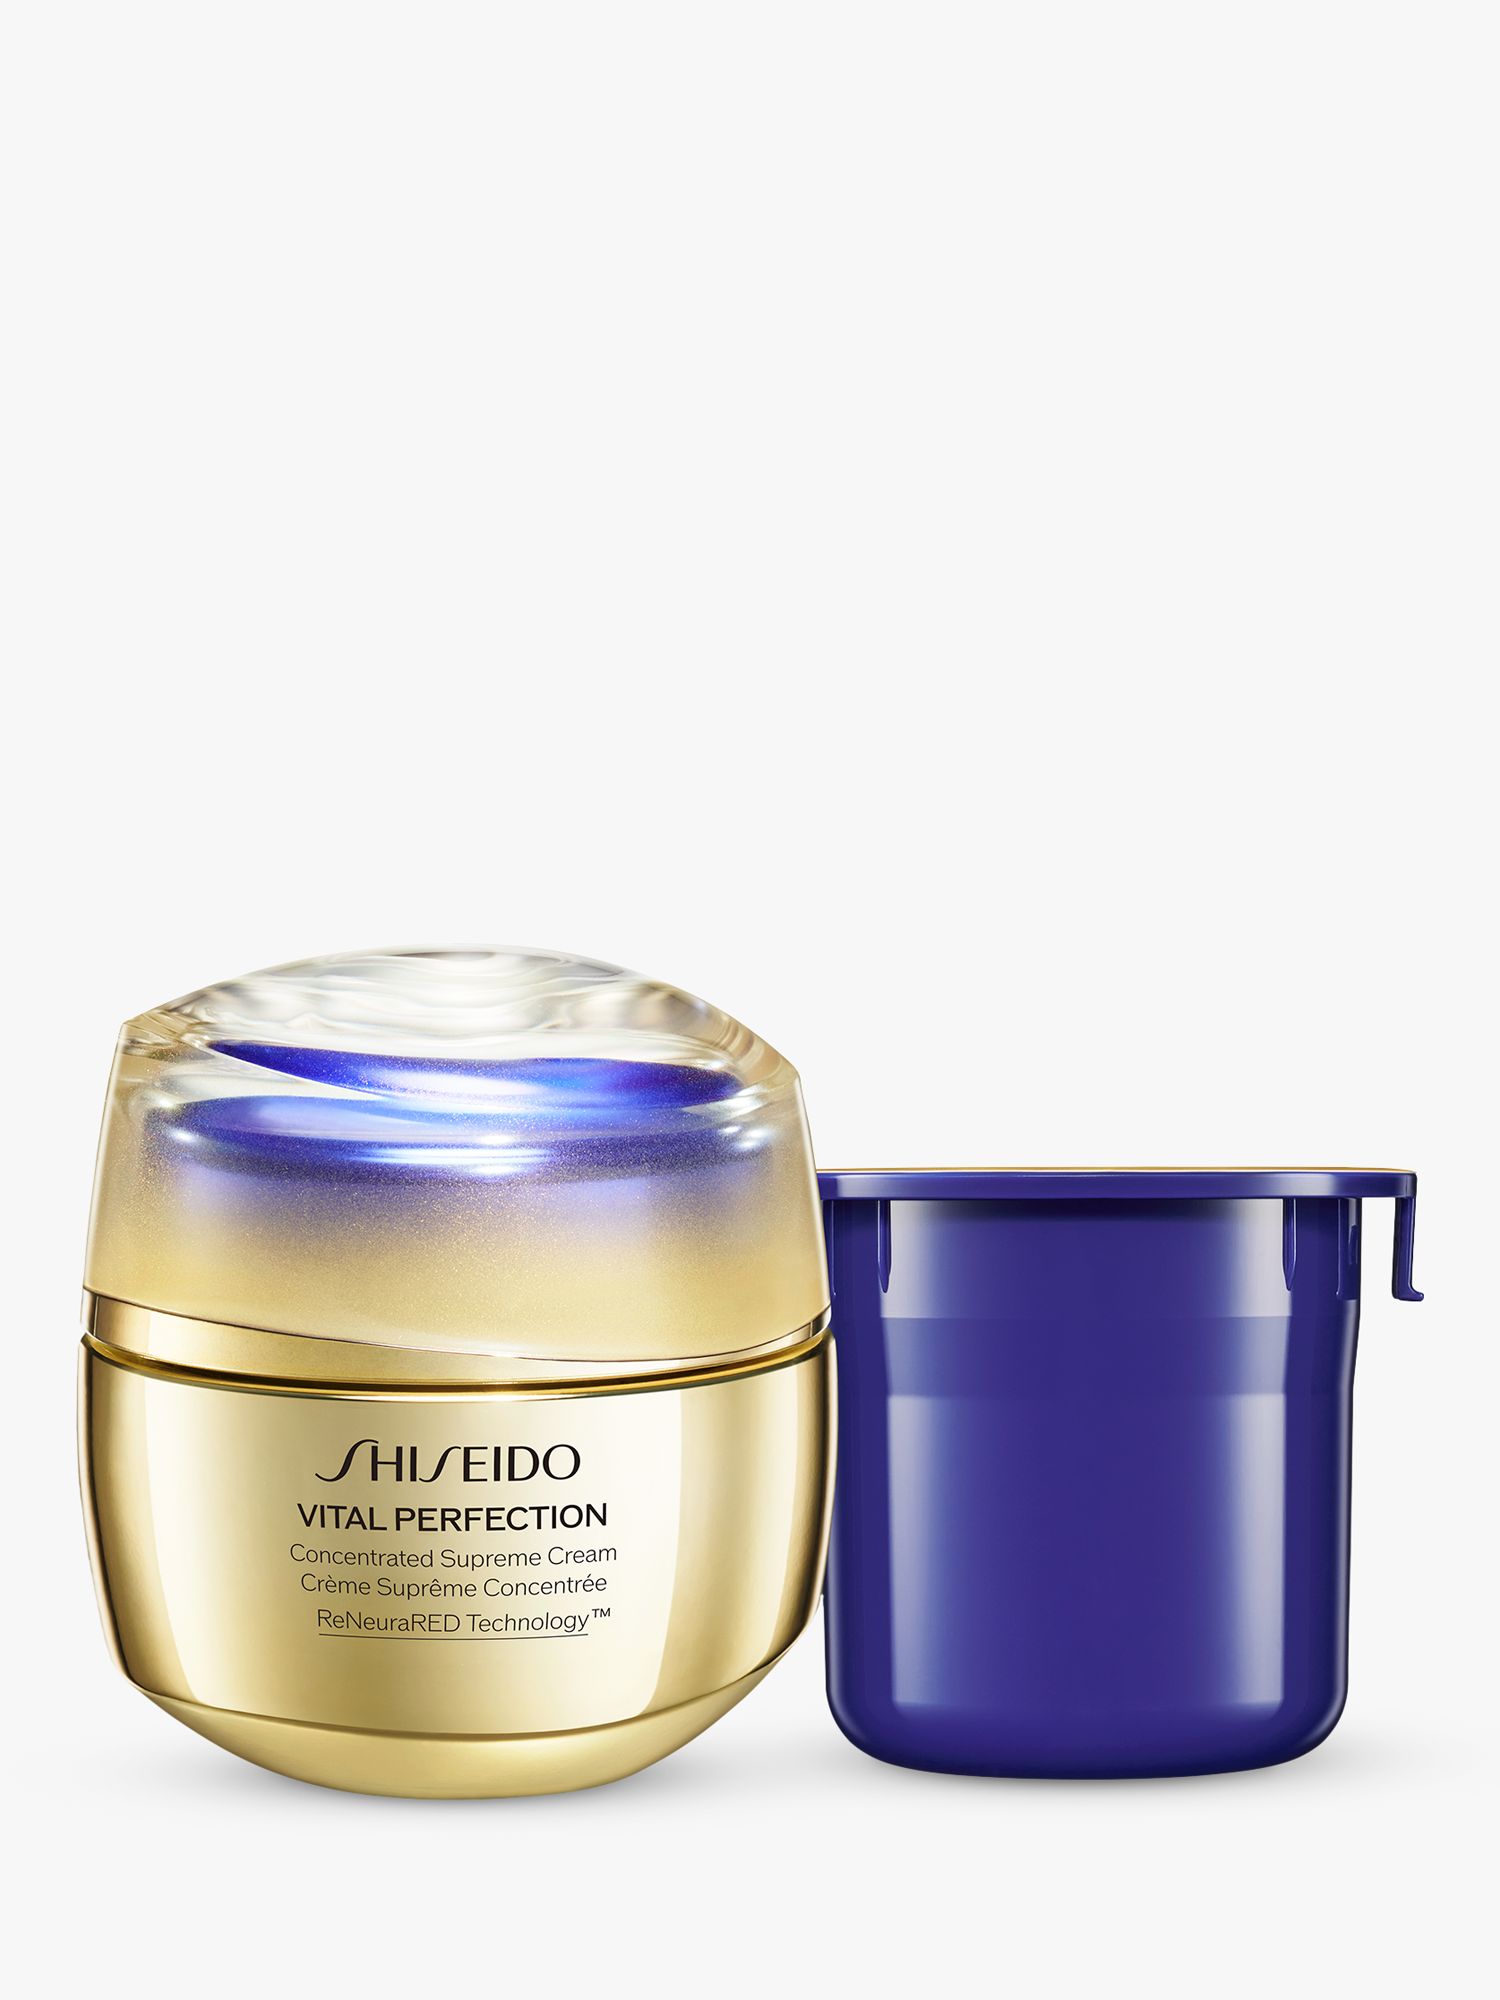 Shiseido Vital Perfection Concentrated Supreme Cream Duo Skincare Gift Set 1